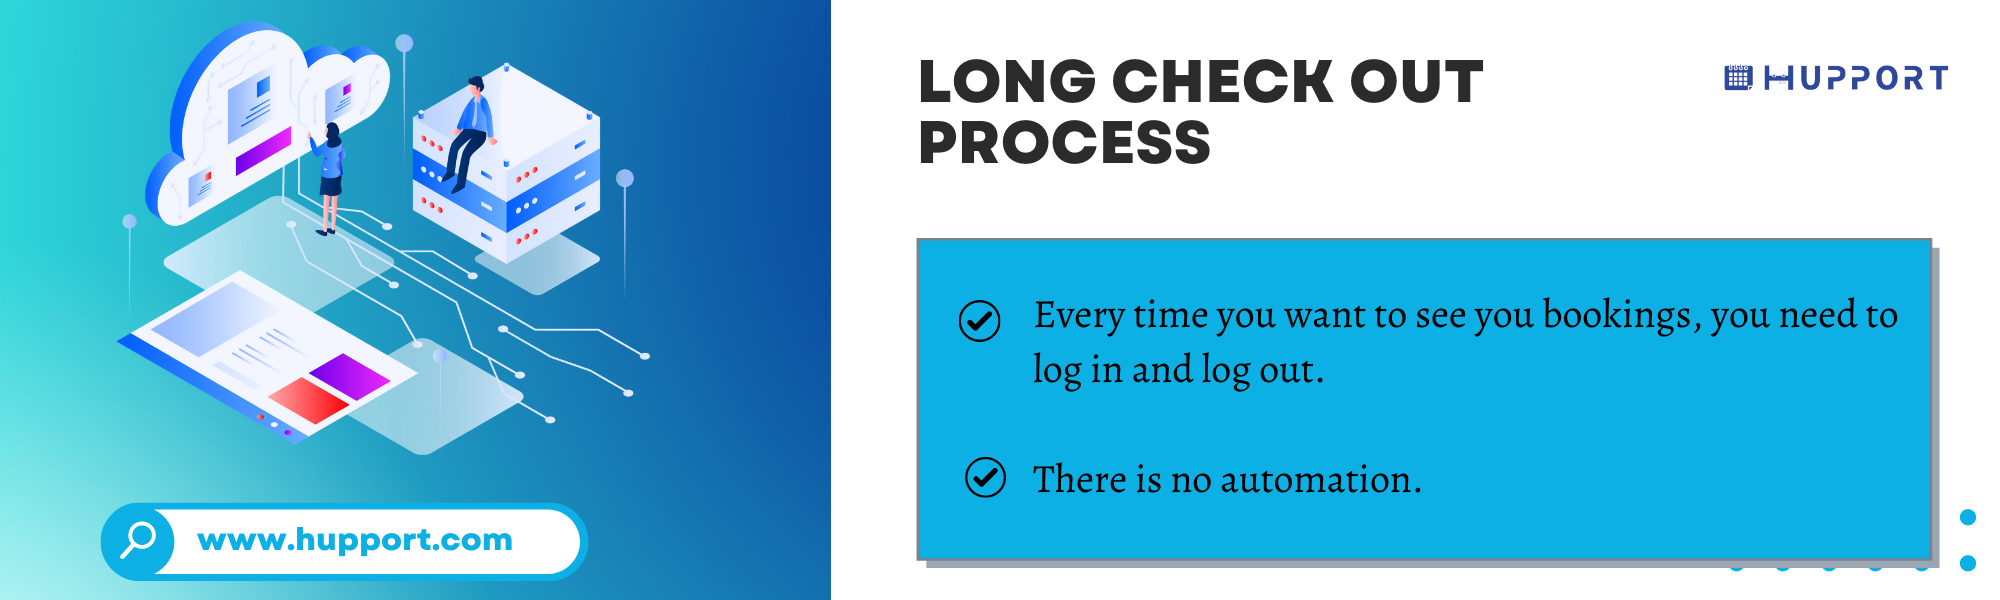 Long check out process